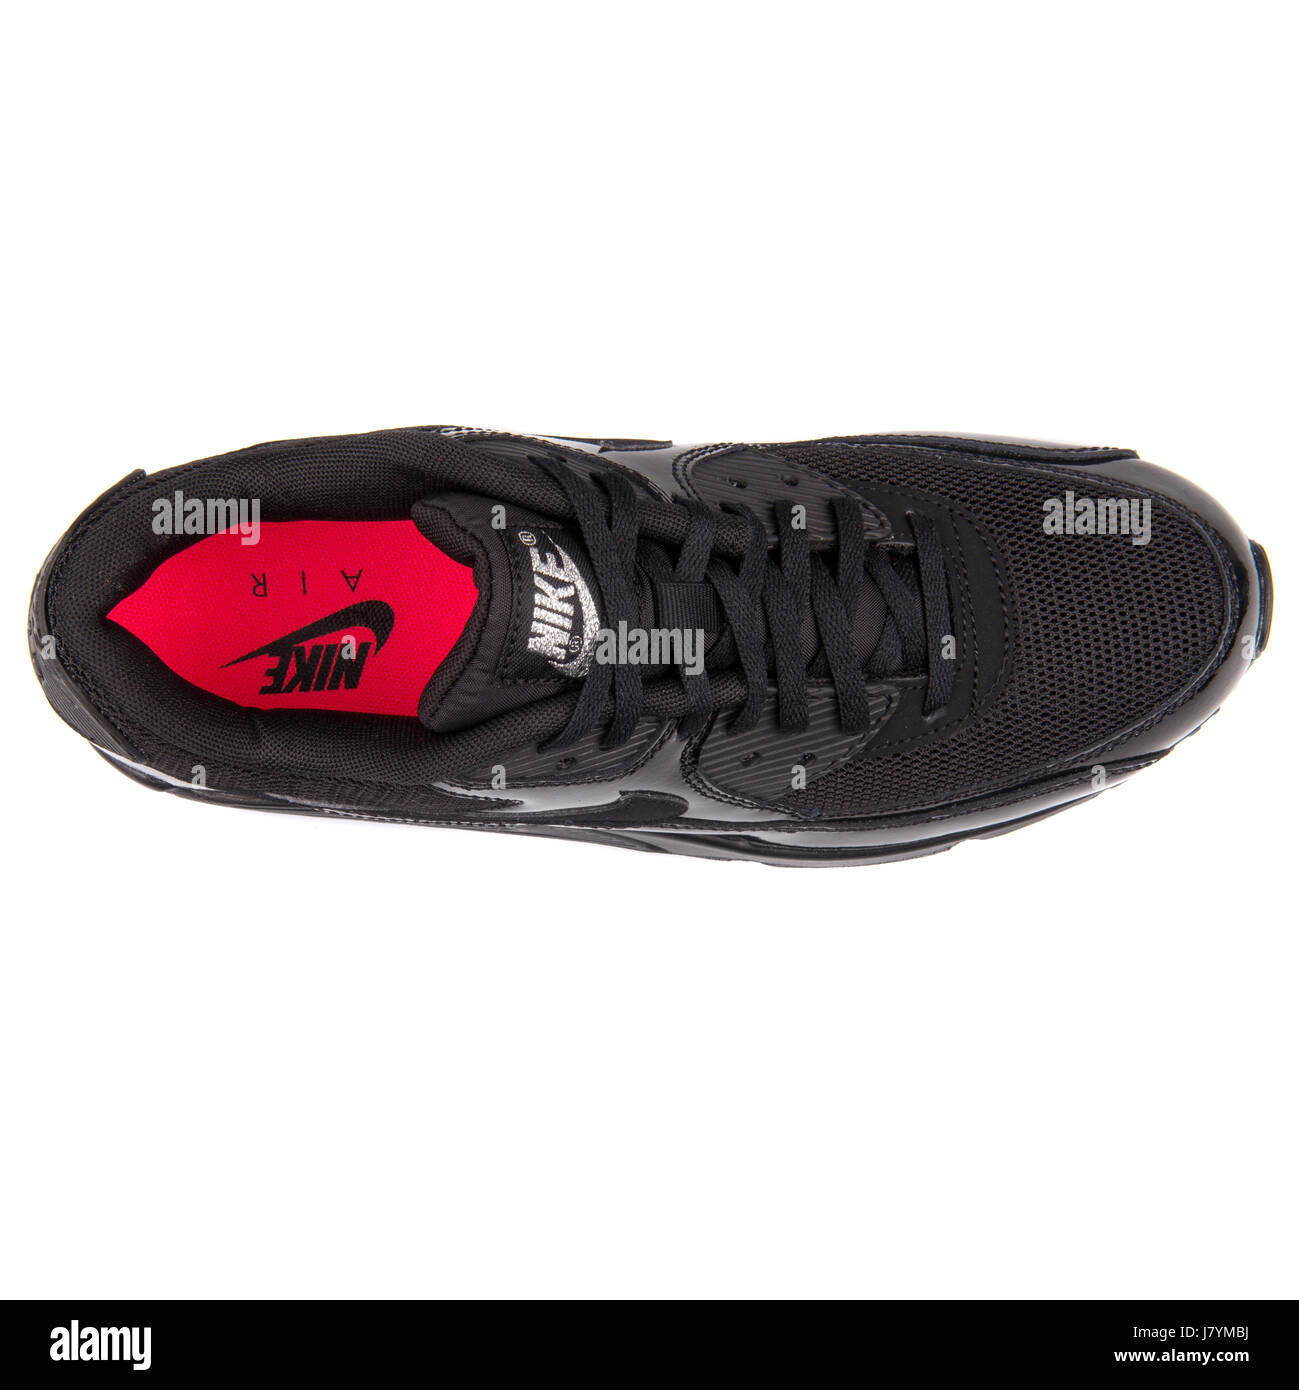 Wmn Nike Air Max 90 Premium Chaussures femmes Noir Brillant - 443817-002  Photo Stock - Alamy